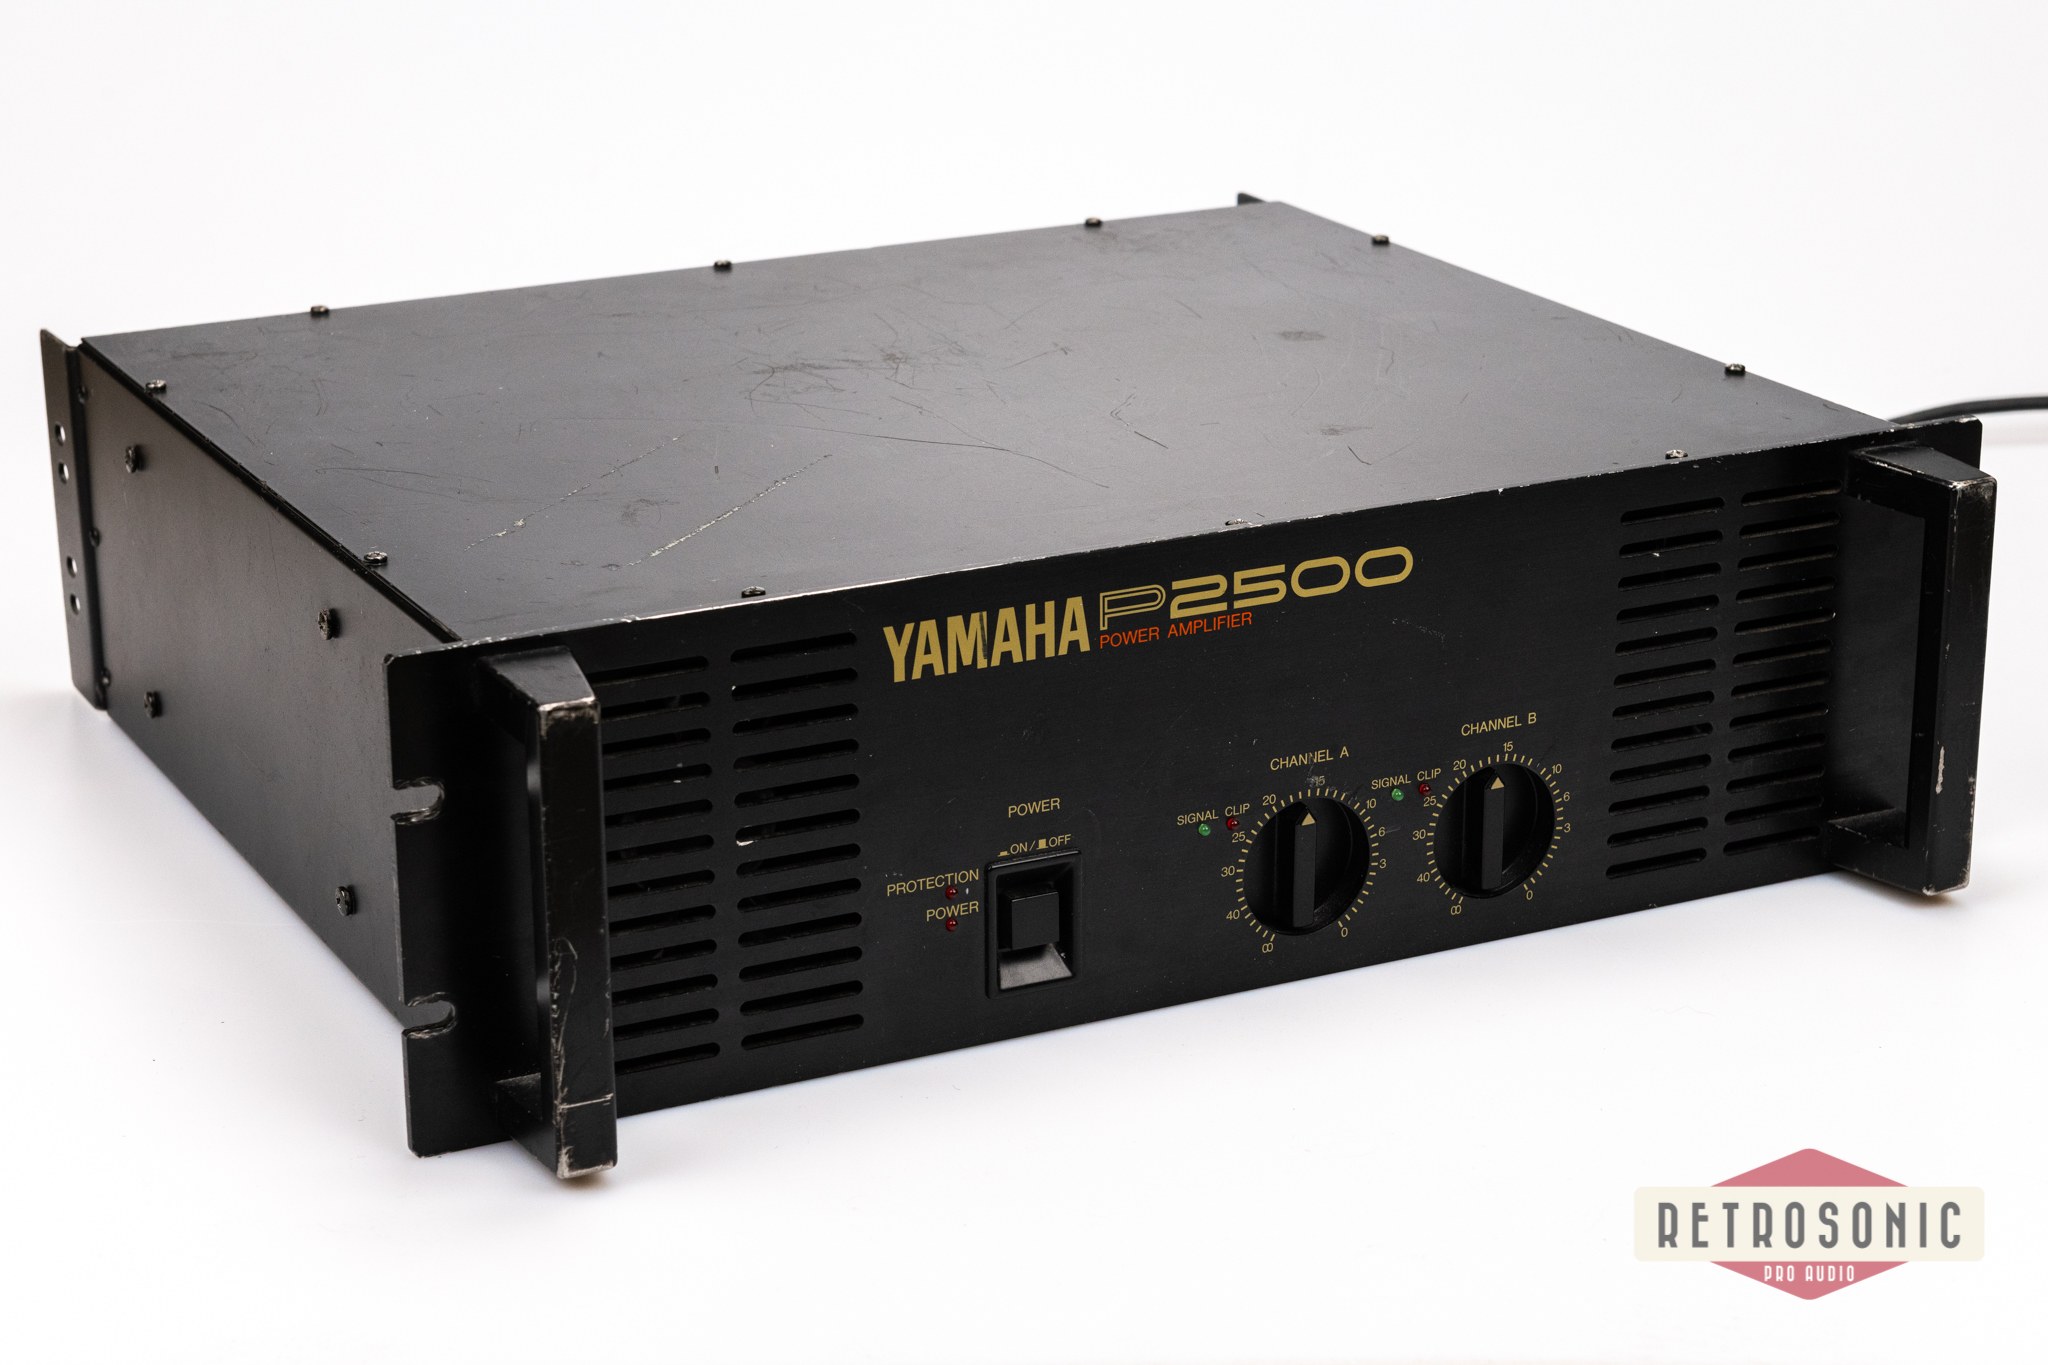 Yamaha P 2500 Power Amp